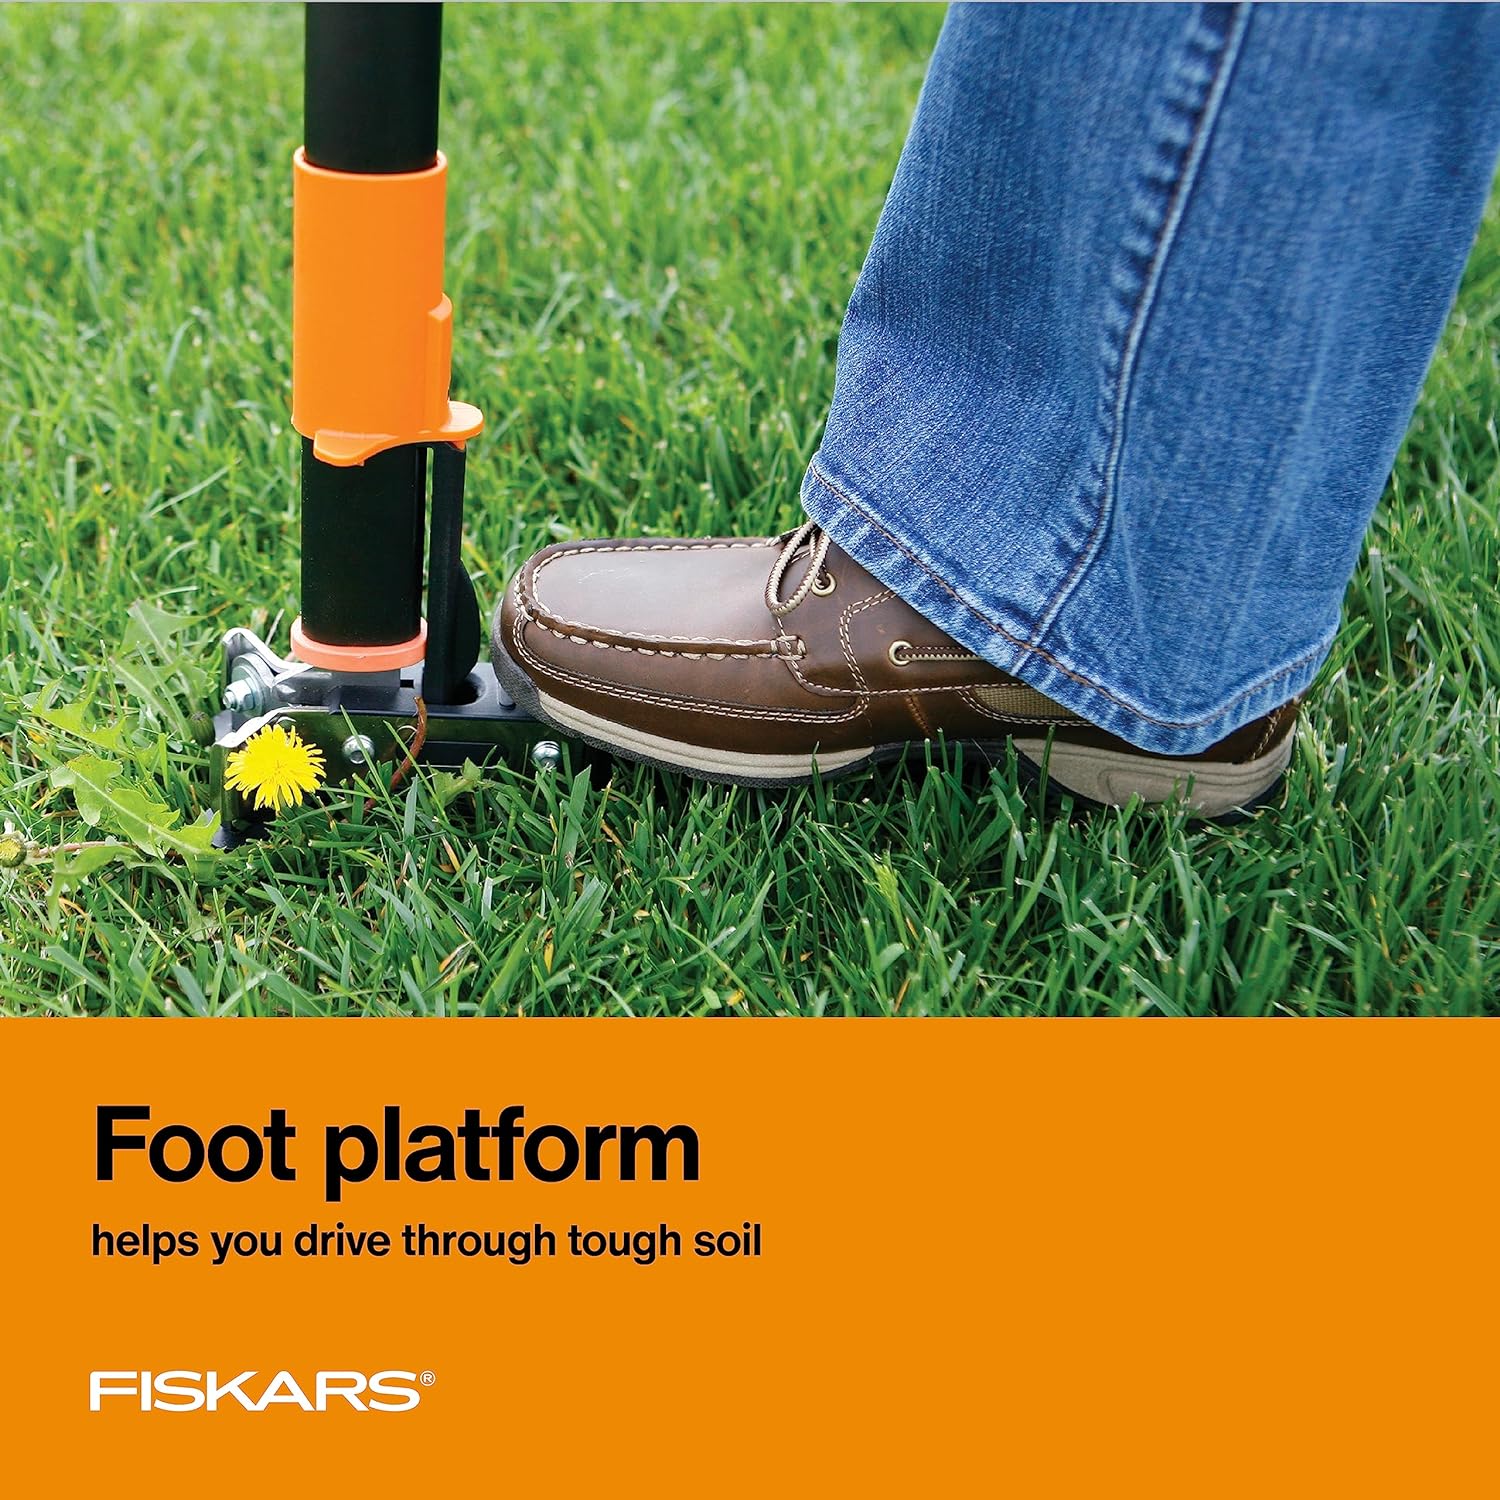 Fiskars 3-Claw Stand Up Weeder - Gardening Hand Weeding Tool with 39" Long Ergonomic Handle - Easy-Eject Mechanism - Black\/Orange